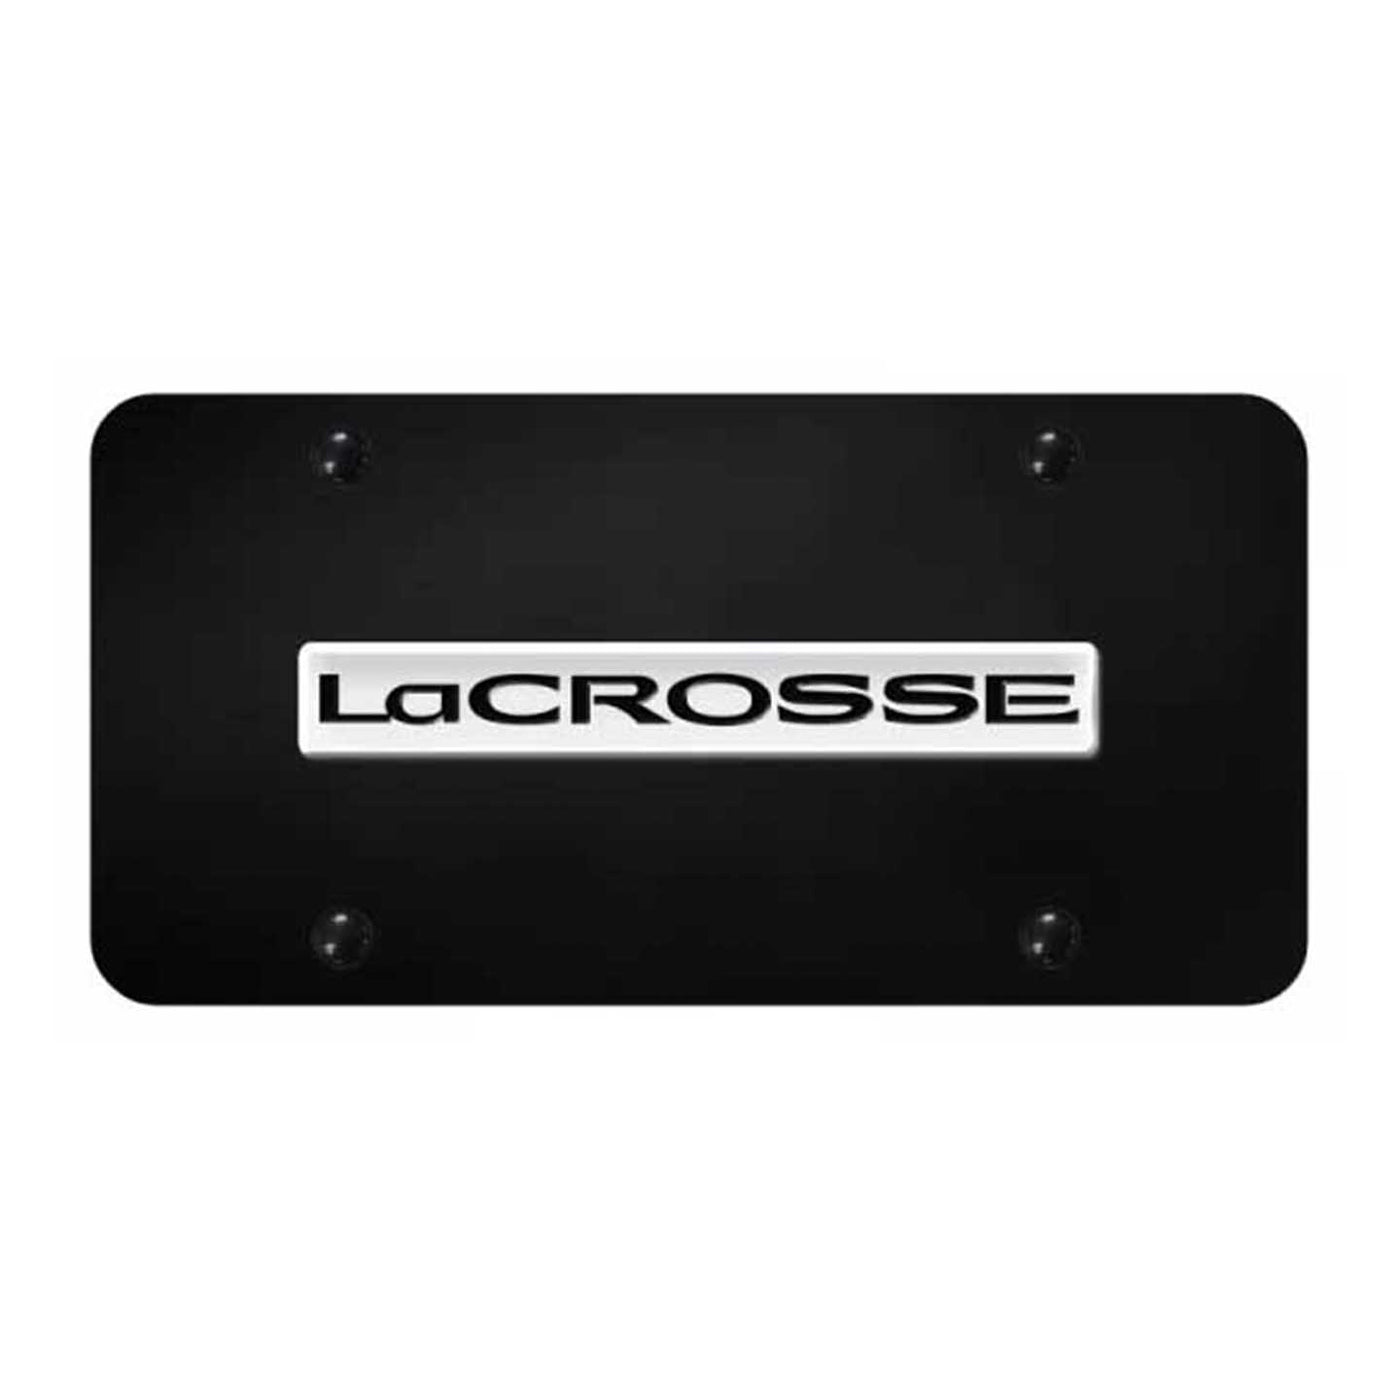 LaCrosse Name License Plate - Chrome on Black